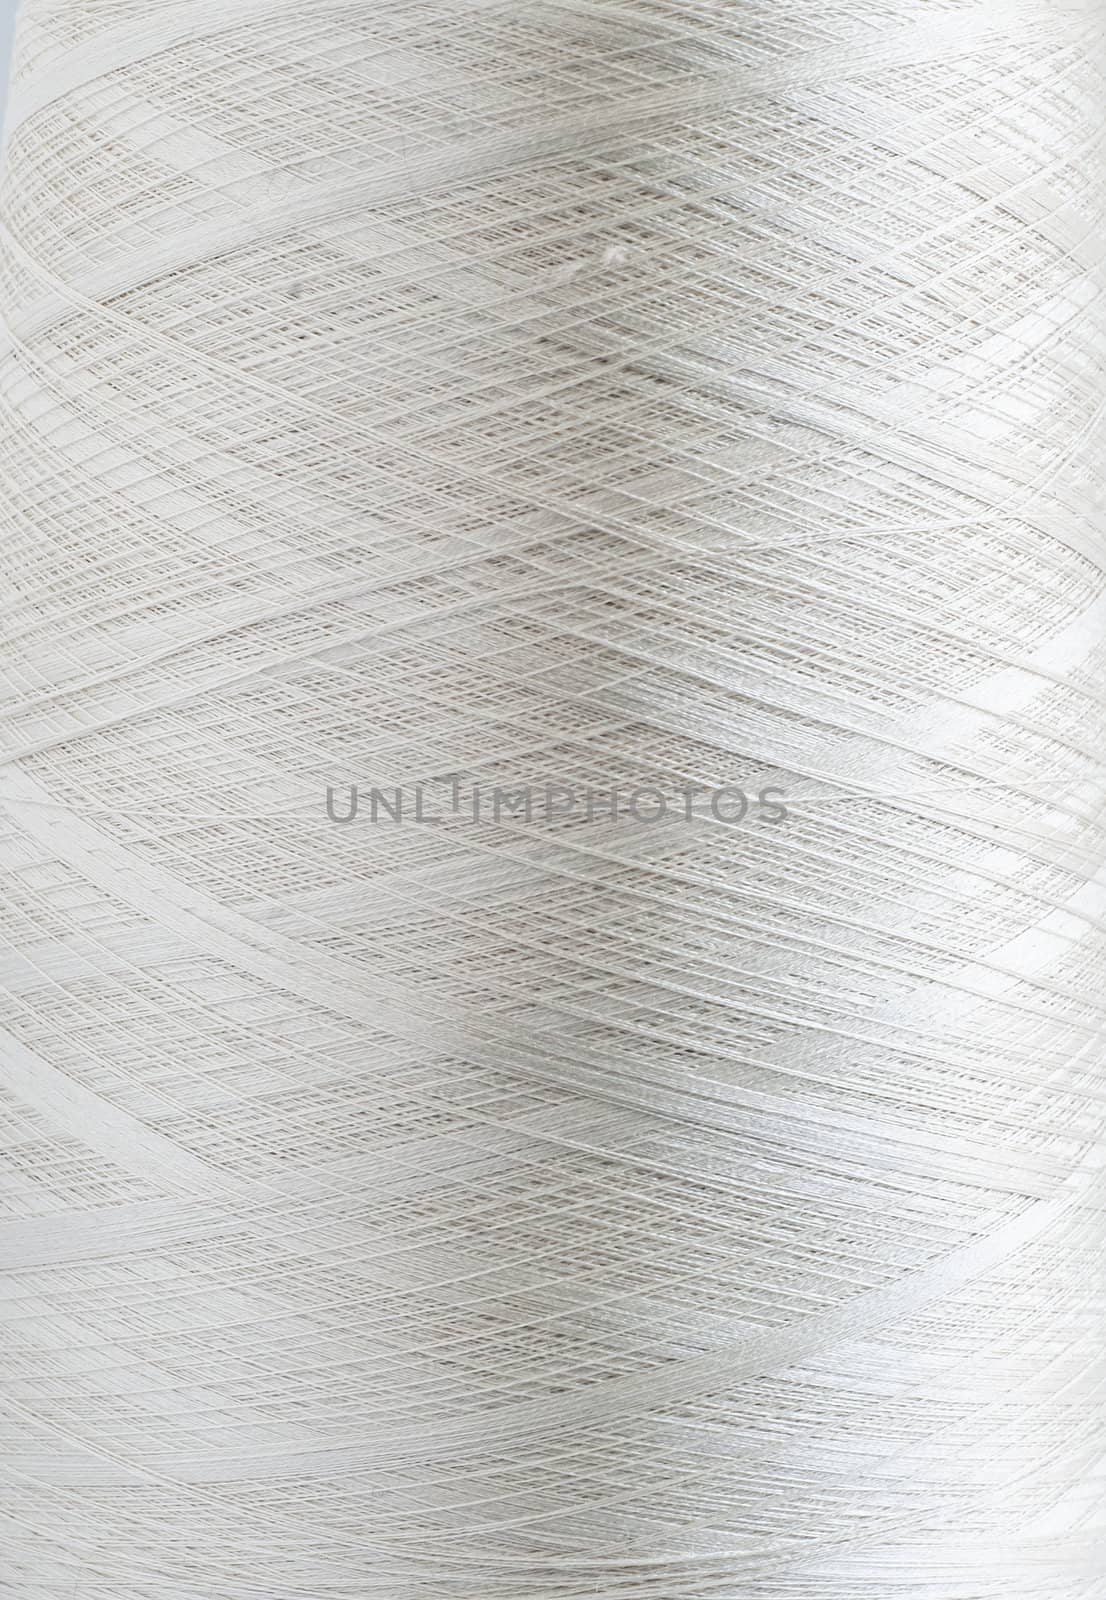 White silk yarn bobbin closeup detail as background